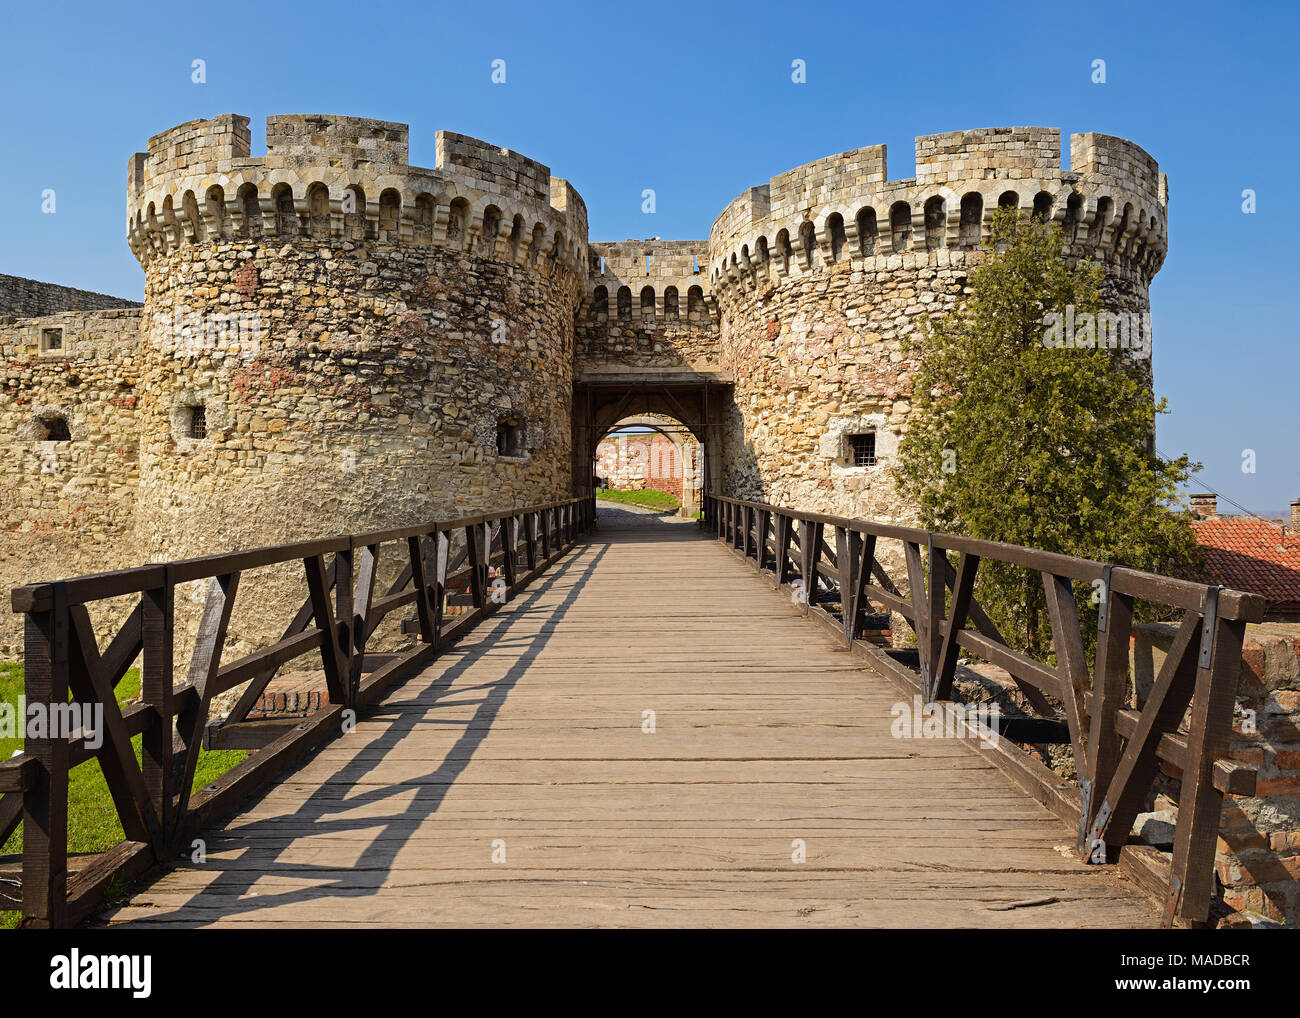 La forteresse de Kalemegdan, Belgrade, Serbie Banque D'Images